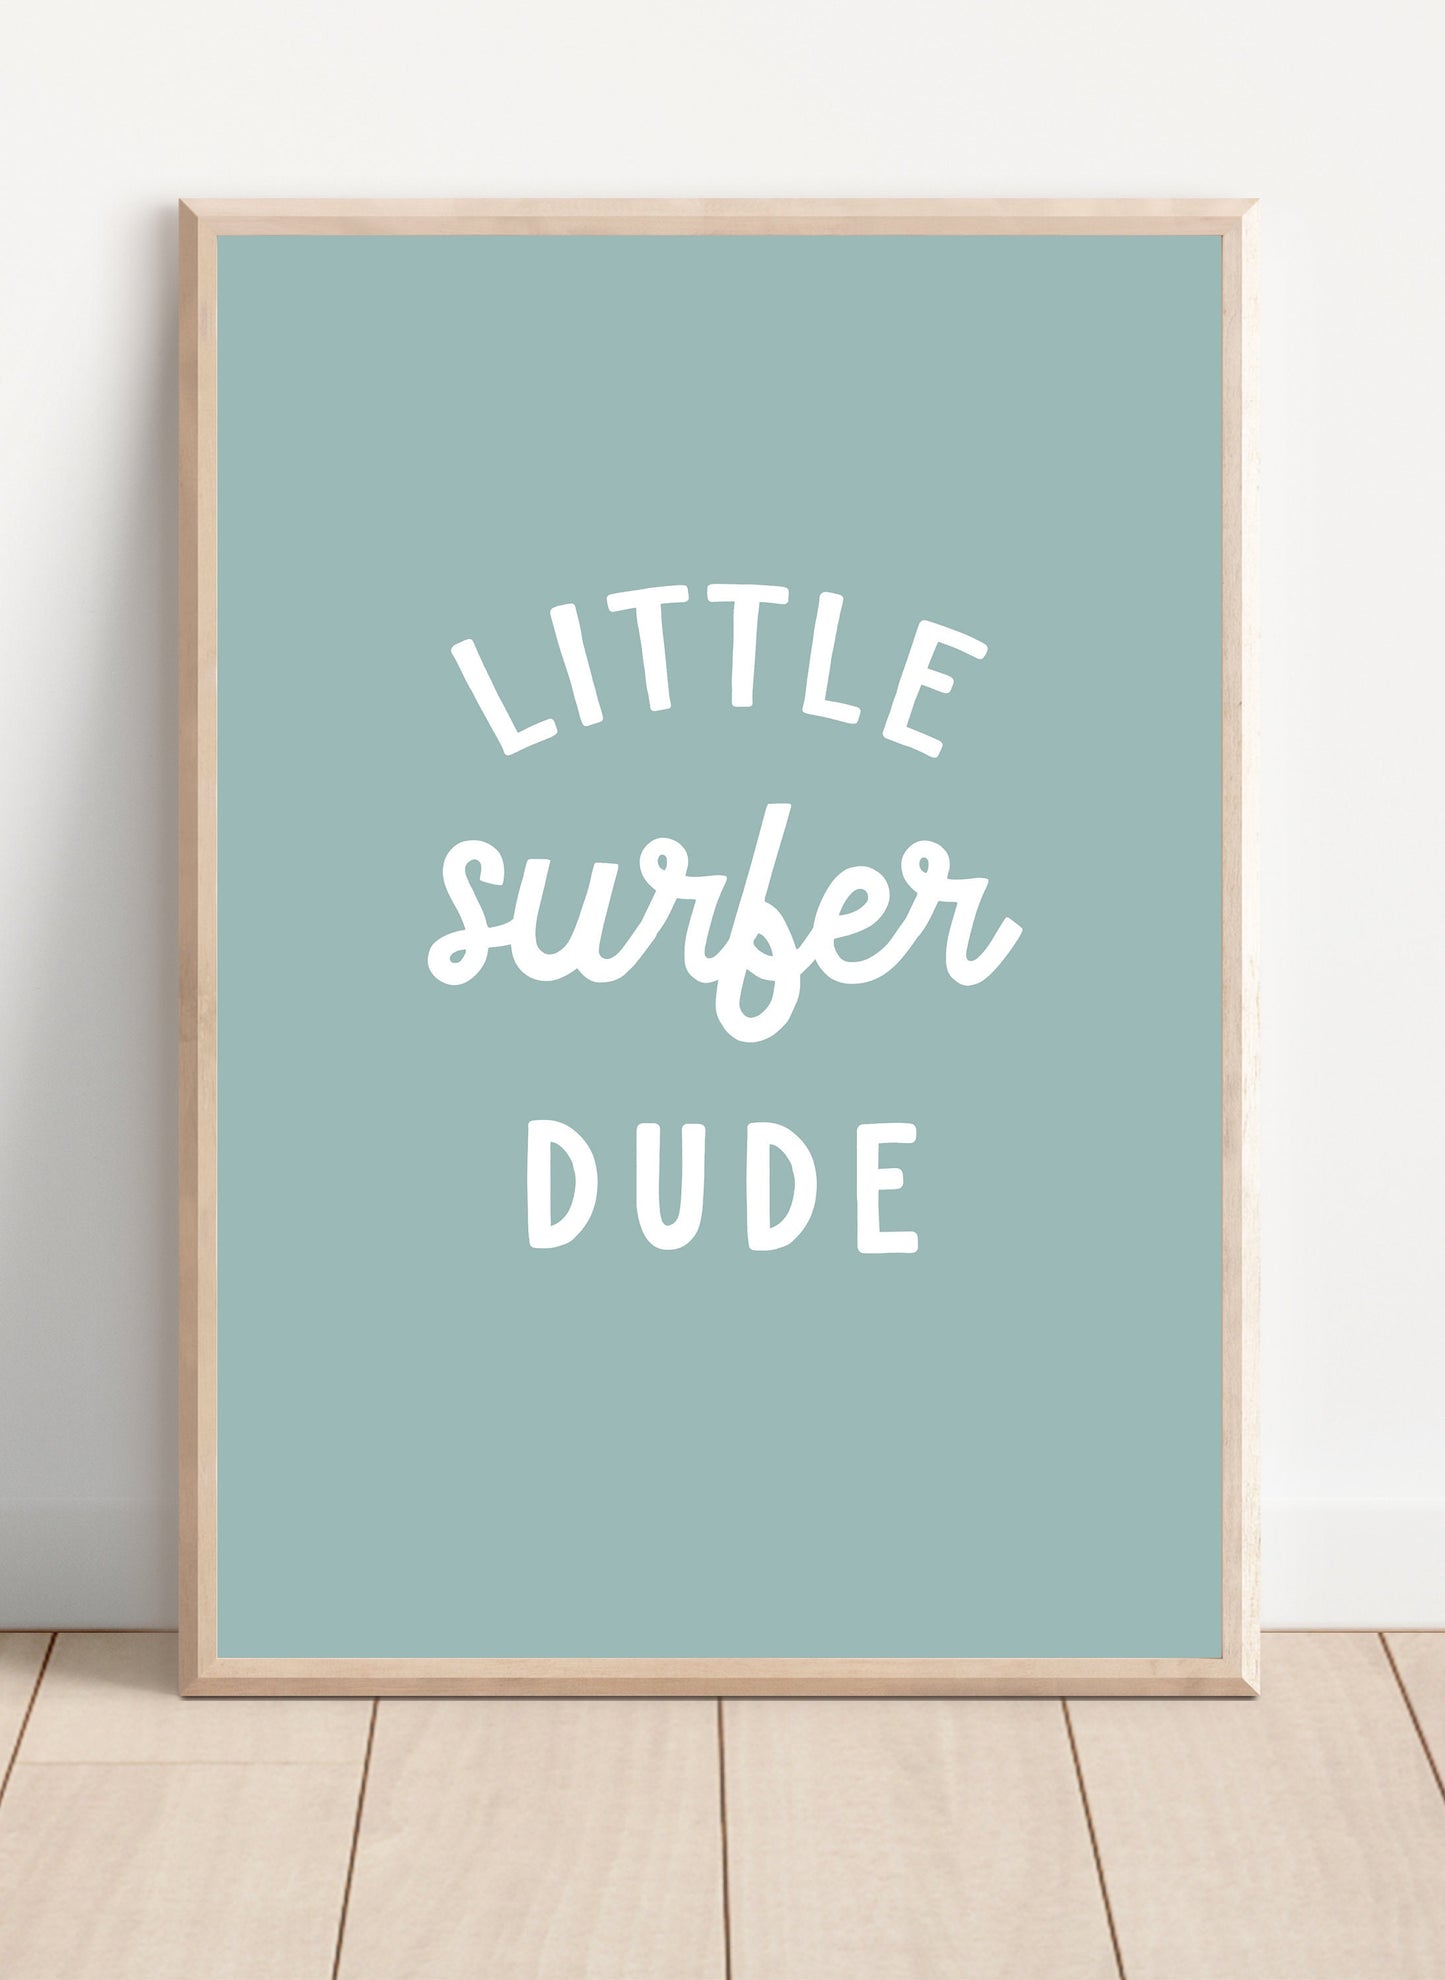 Little Surfer Dude Wall Print